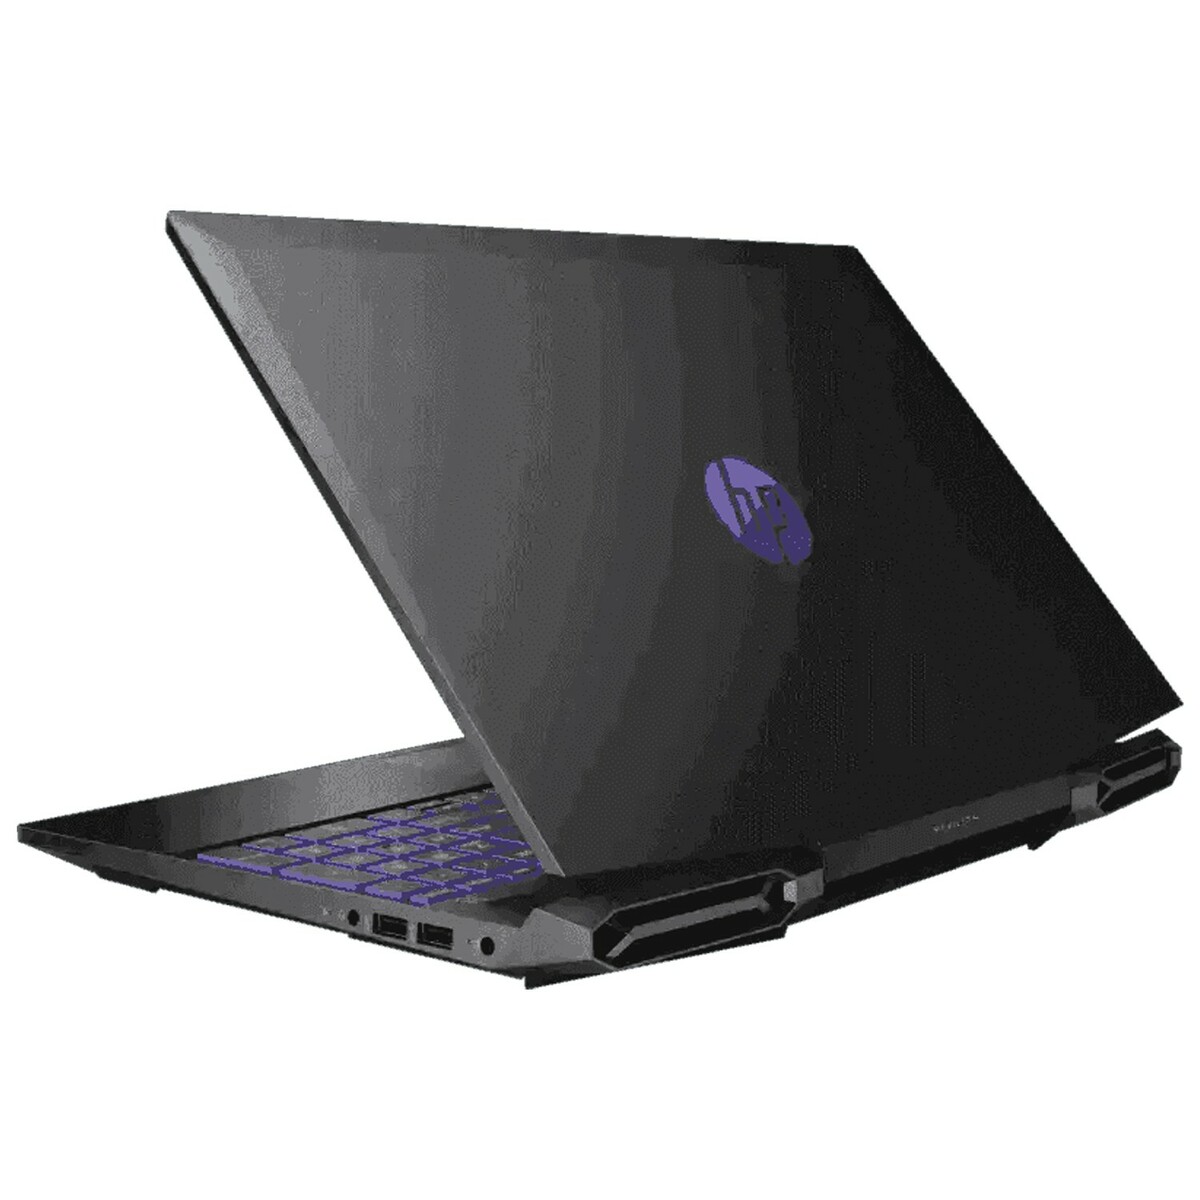 HP Pavilion Gaming Laptop 15 DK2012TX Core i5 11th Gen 15.6" Win 10 Shadow Black